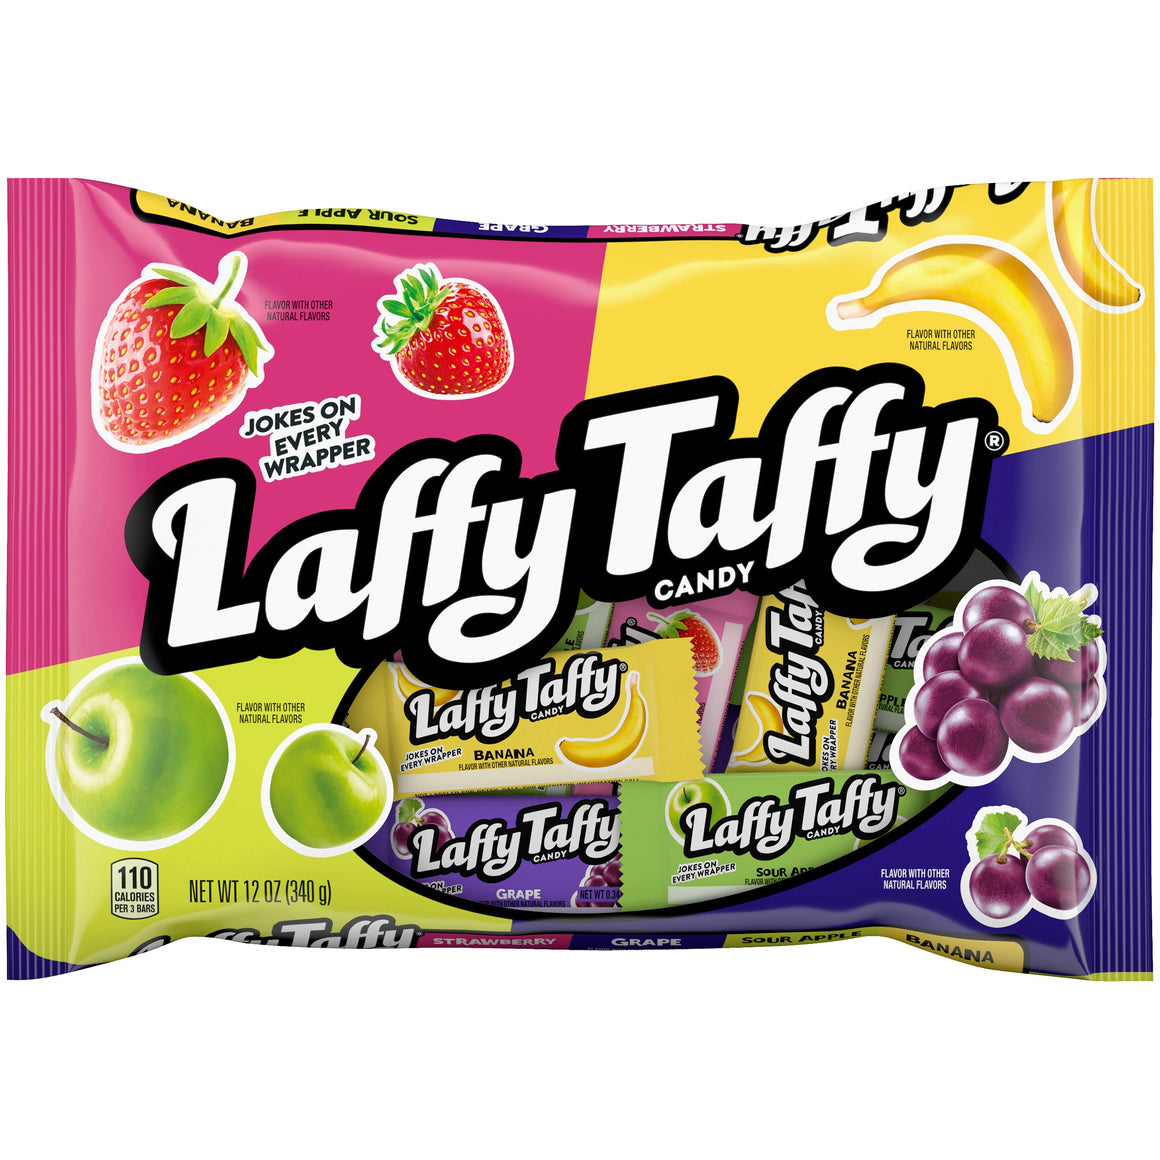 All City Candy Laffy Taffy Assorted Mini Bars - 12-oz. Bag Taffy Ferrara Candy Company For fresh candy and great service, visit www.allcitycandy.com